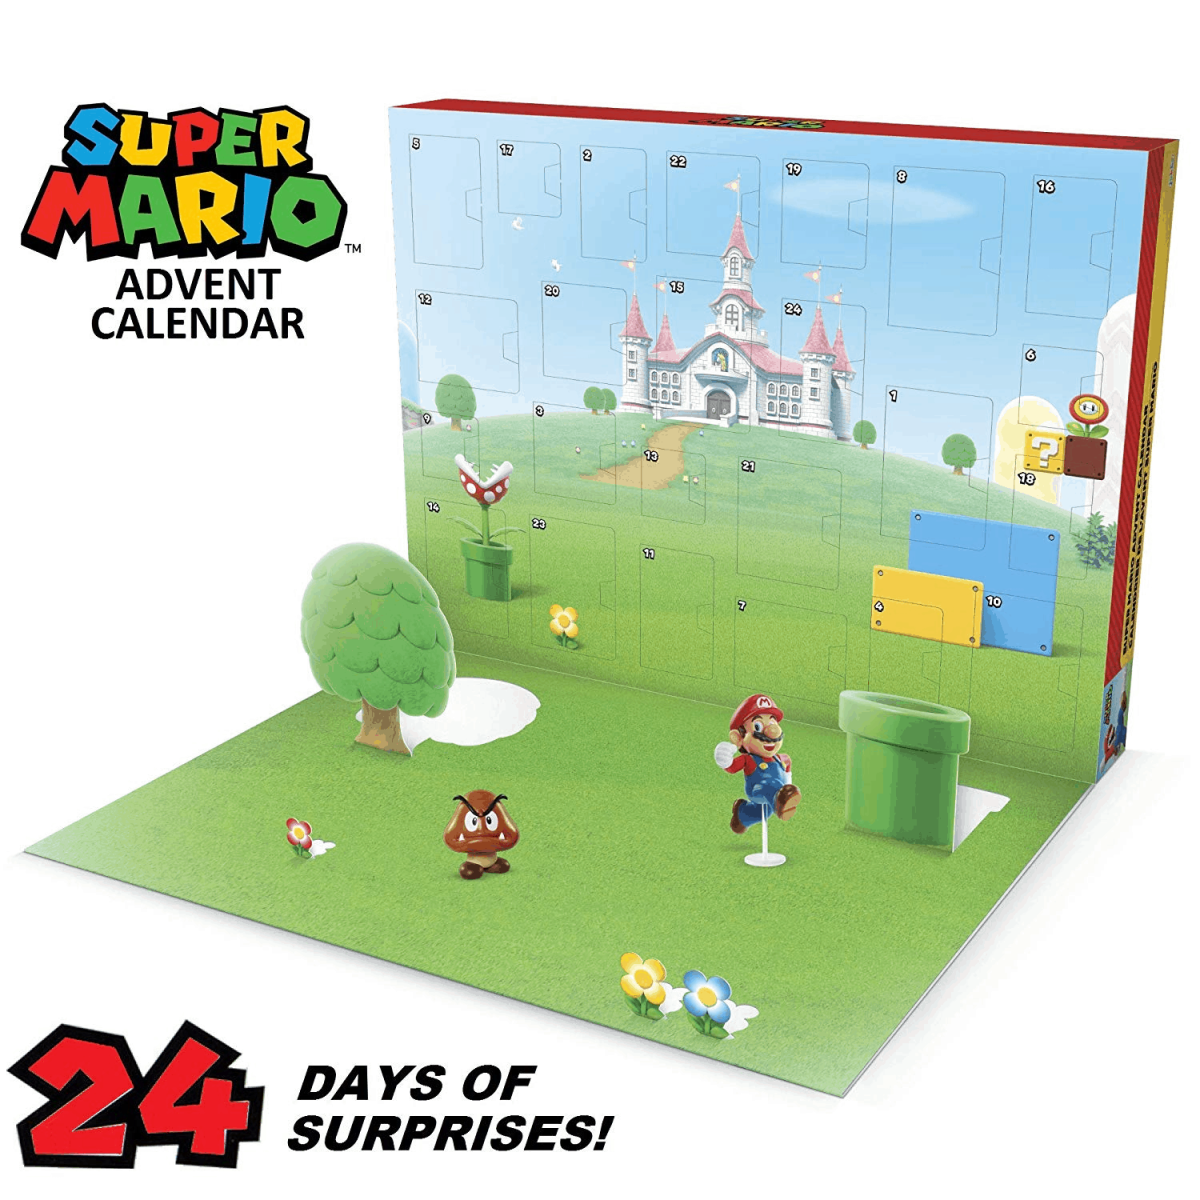 2019 Nintendo Super Mario Advent Calendar Available Now + Spoilers